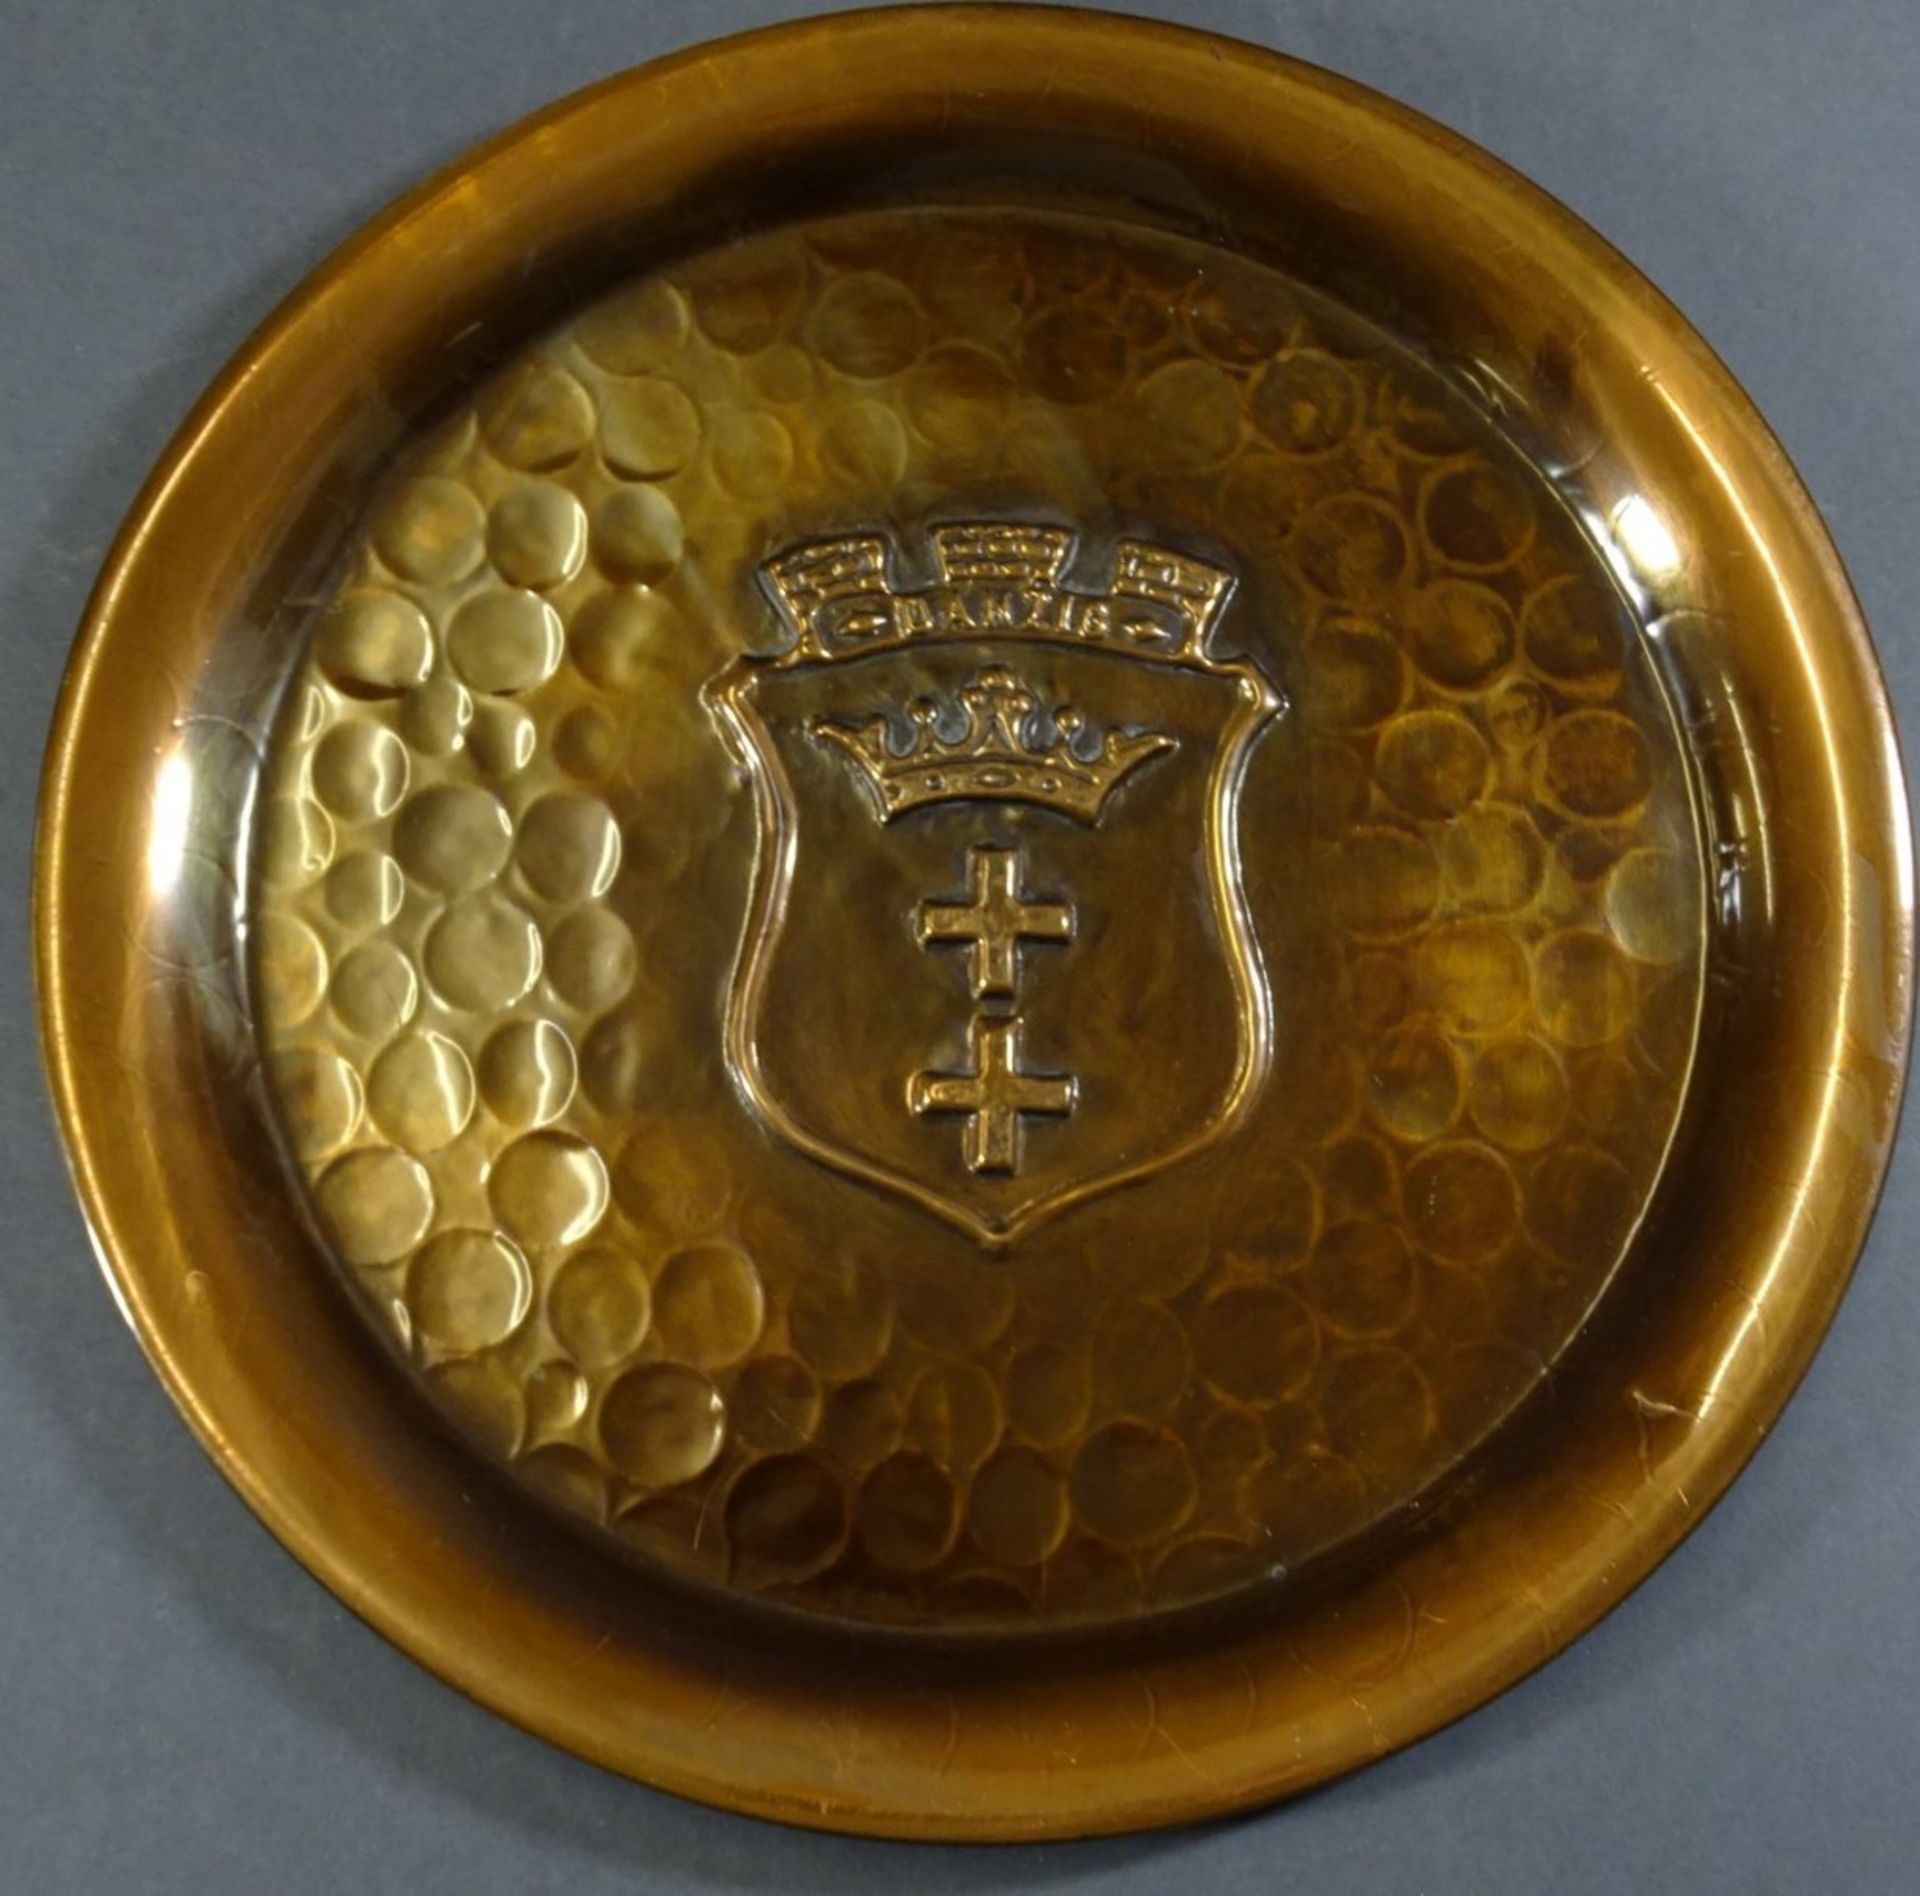 Kupferteller mit Danzig Wappen, D- 25,5cm